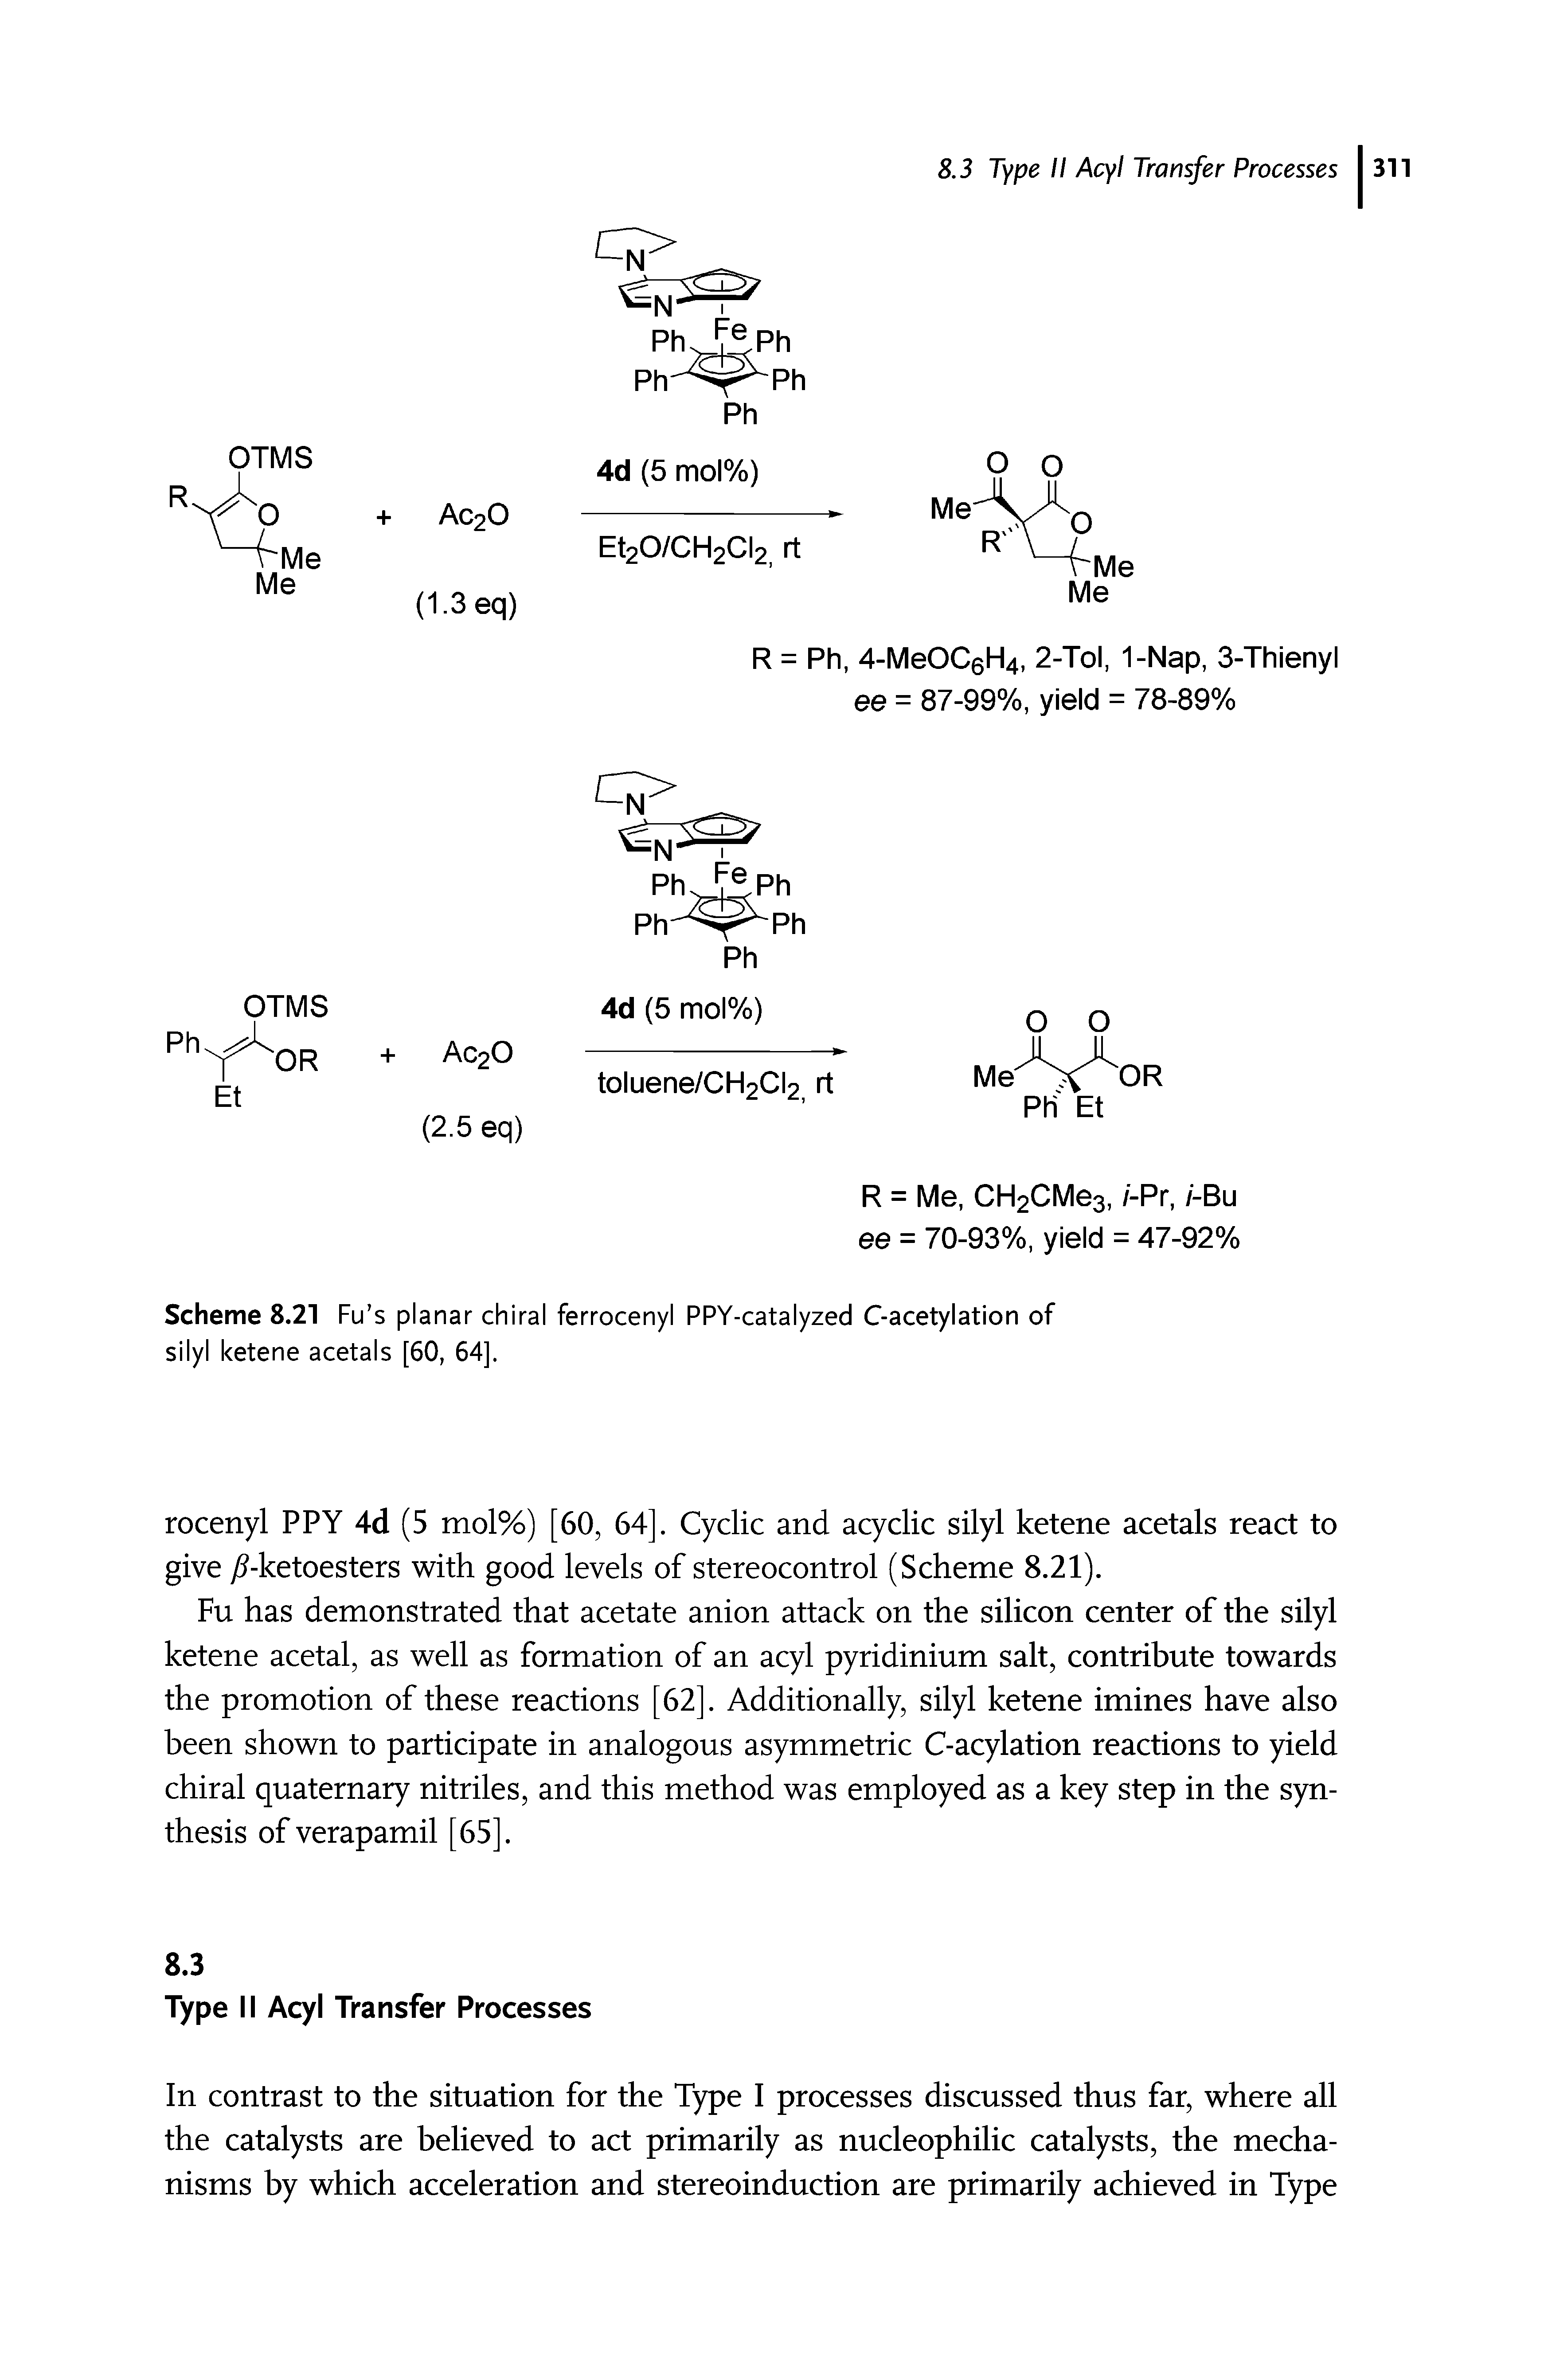 Scheme 8.21 Fu s planar chiral ferrocenyl PPY-catalyzed C-acetylation of silyl ketene acetals [60, 64].